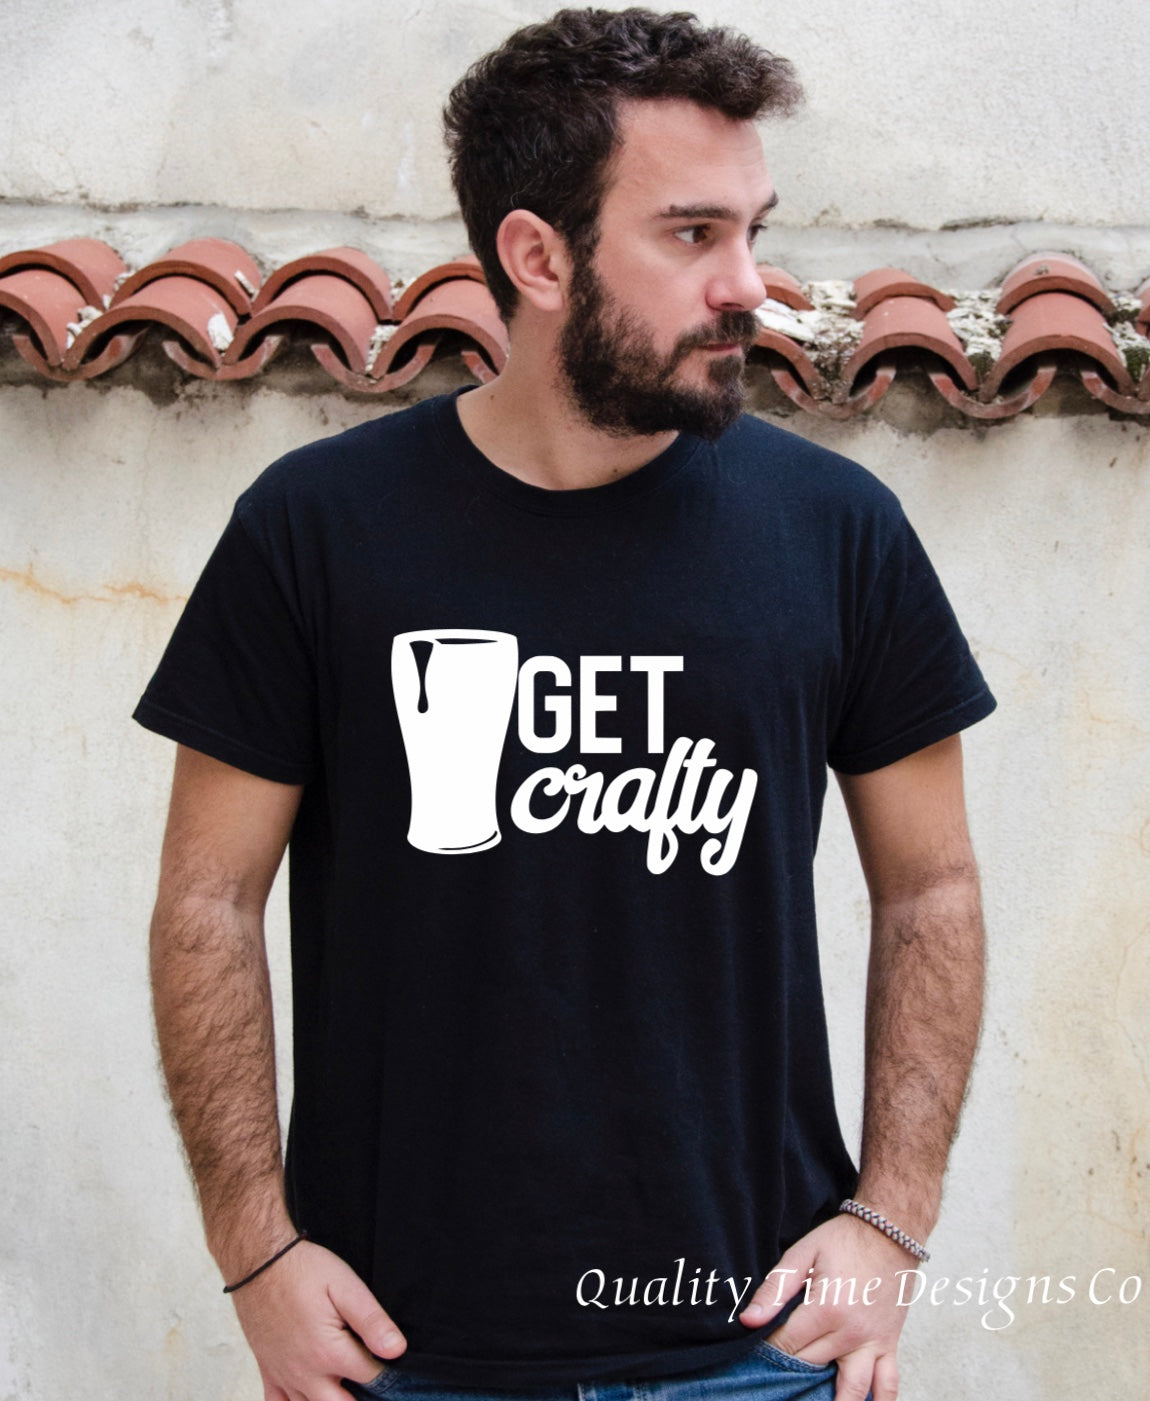 Get crafty t-shirt 